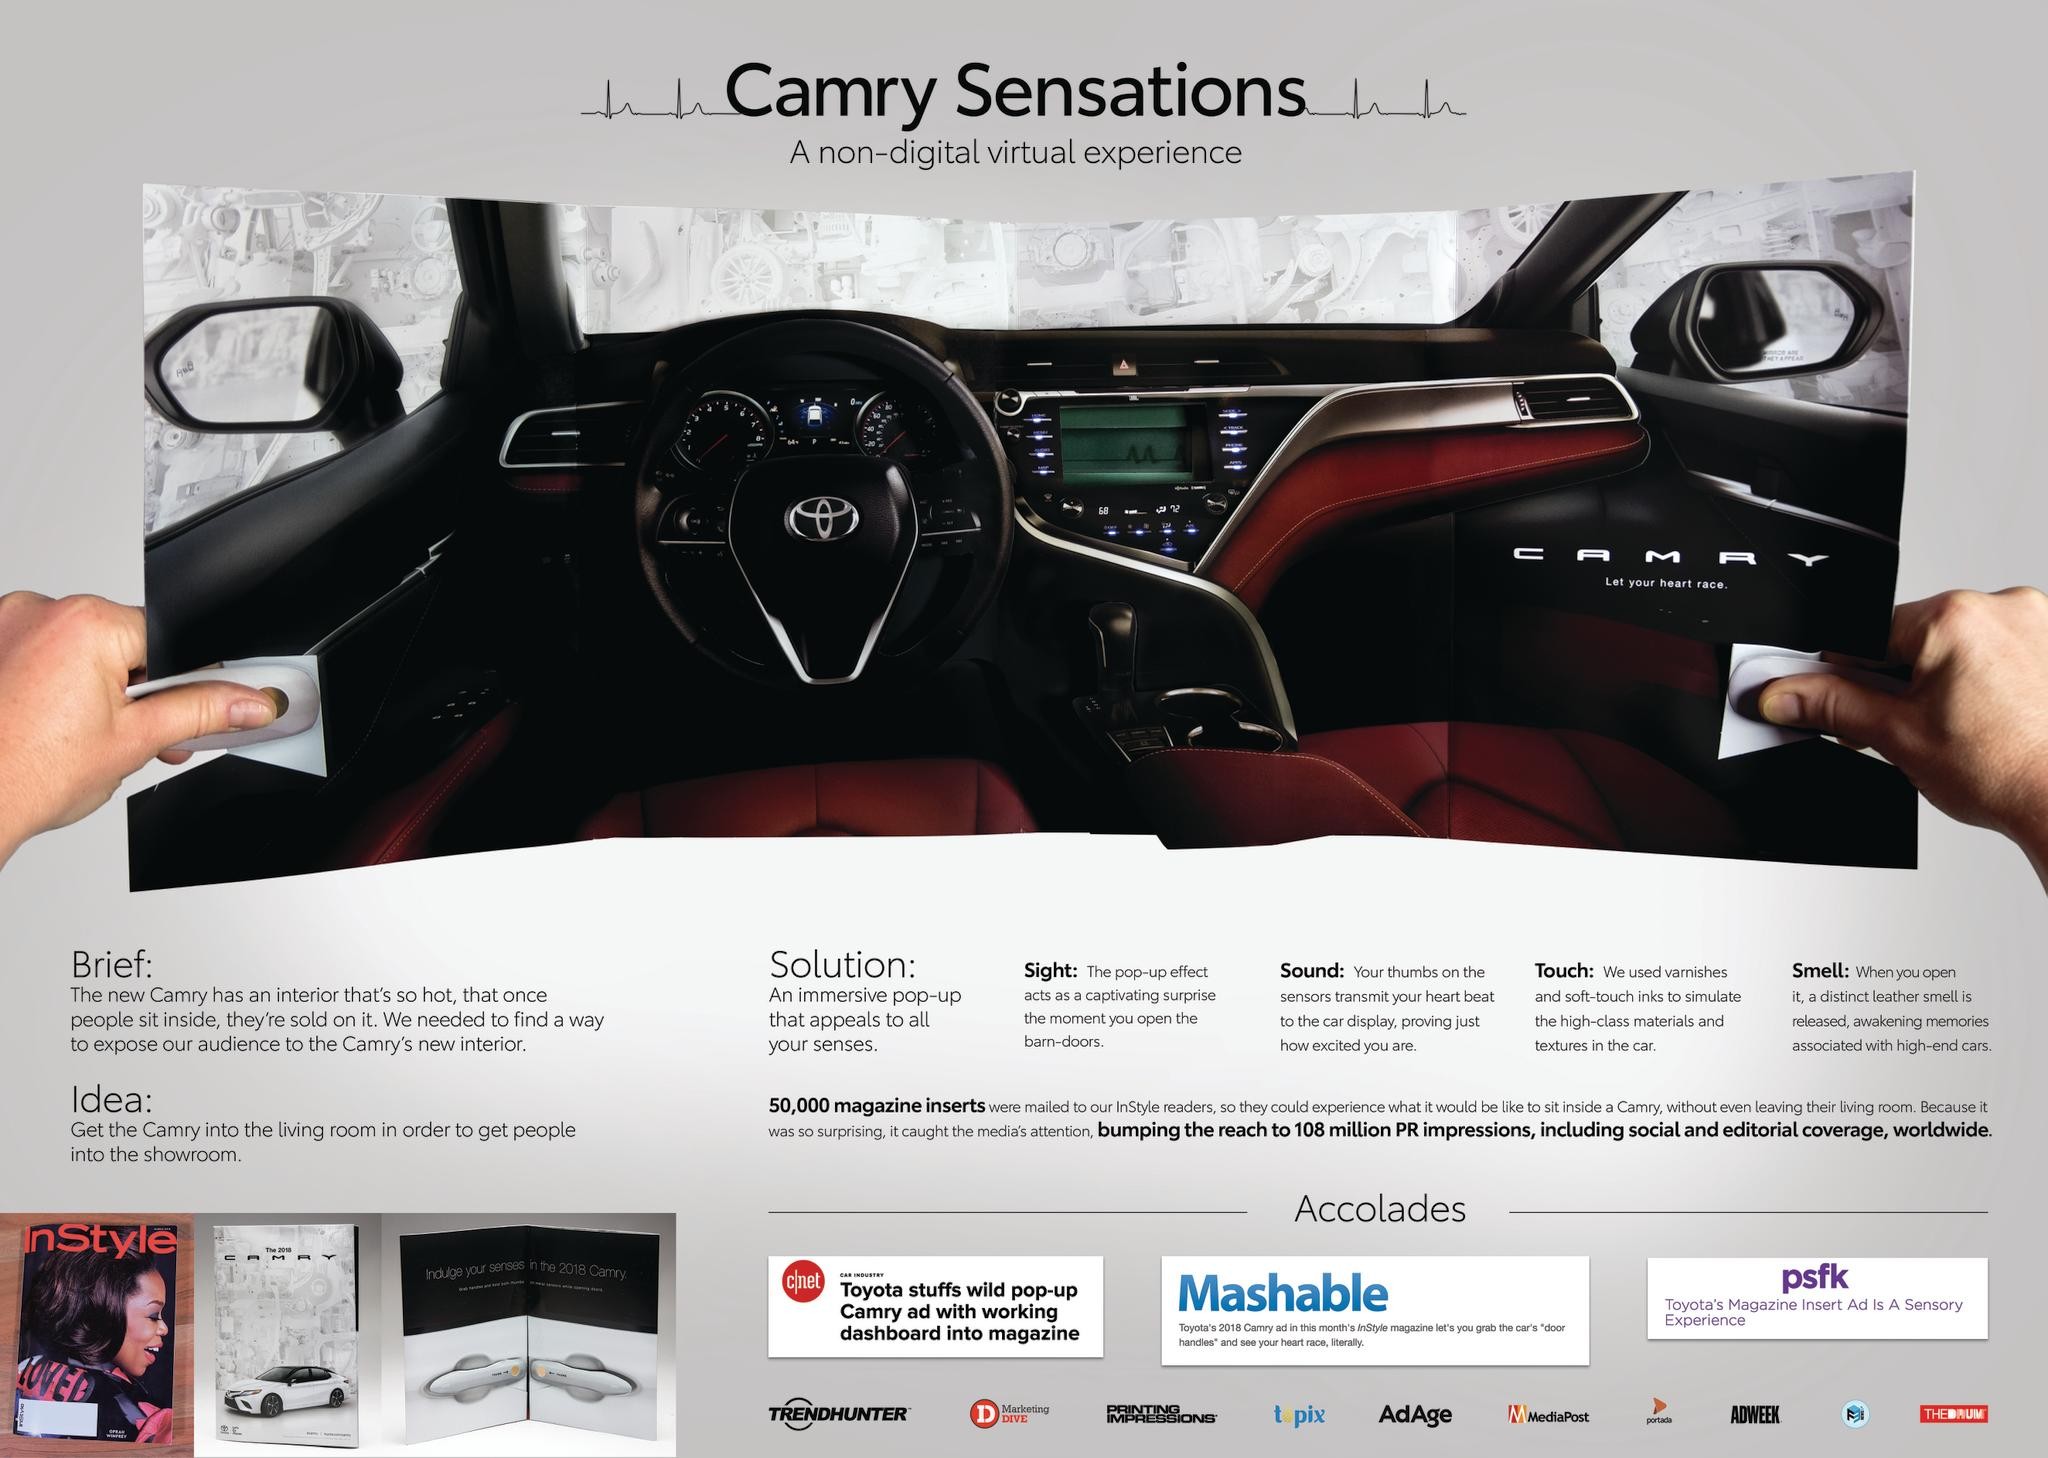 Camry Sensations: A Non-Digital Virtual Experience